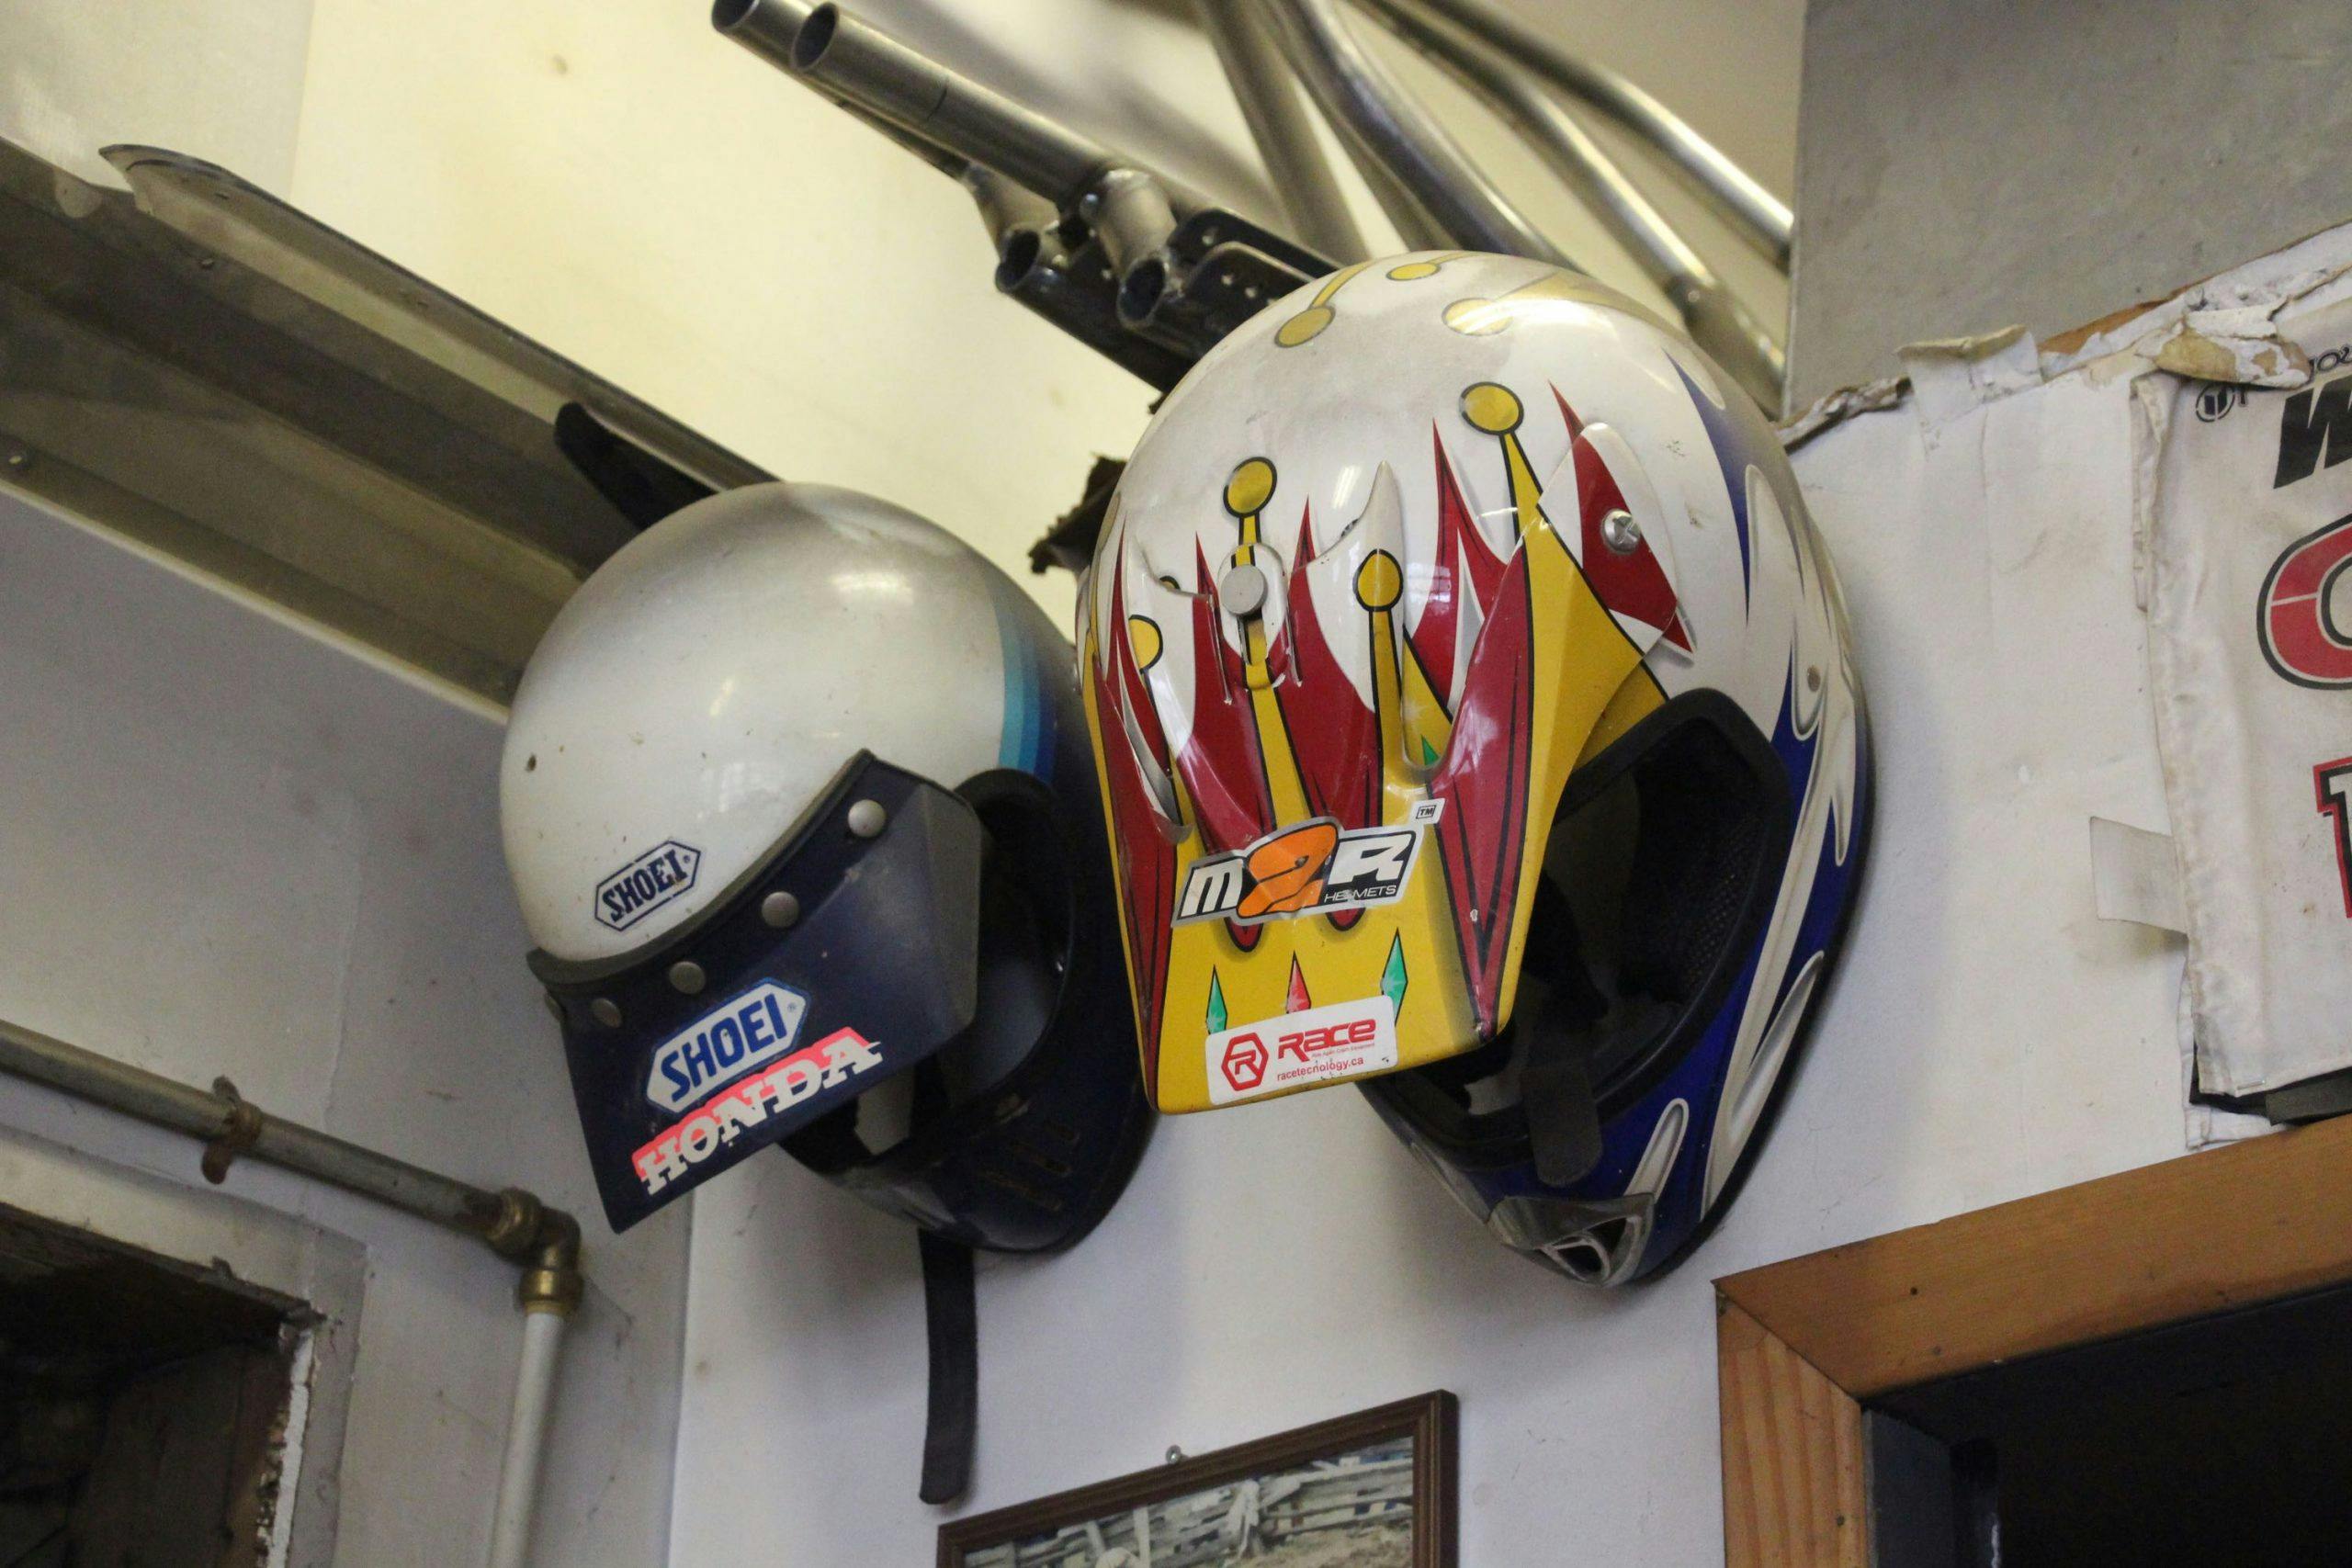 Mike Westwood helmets shop